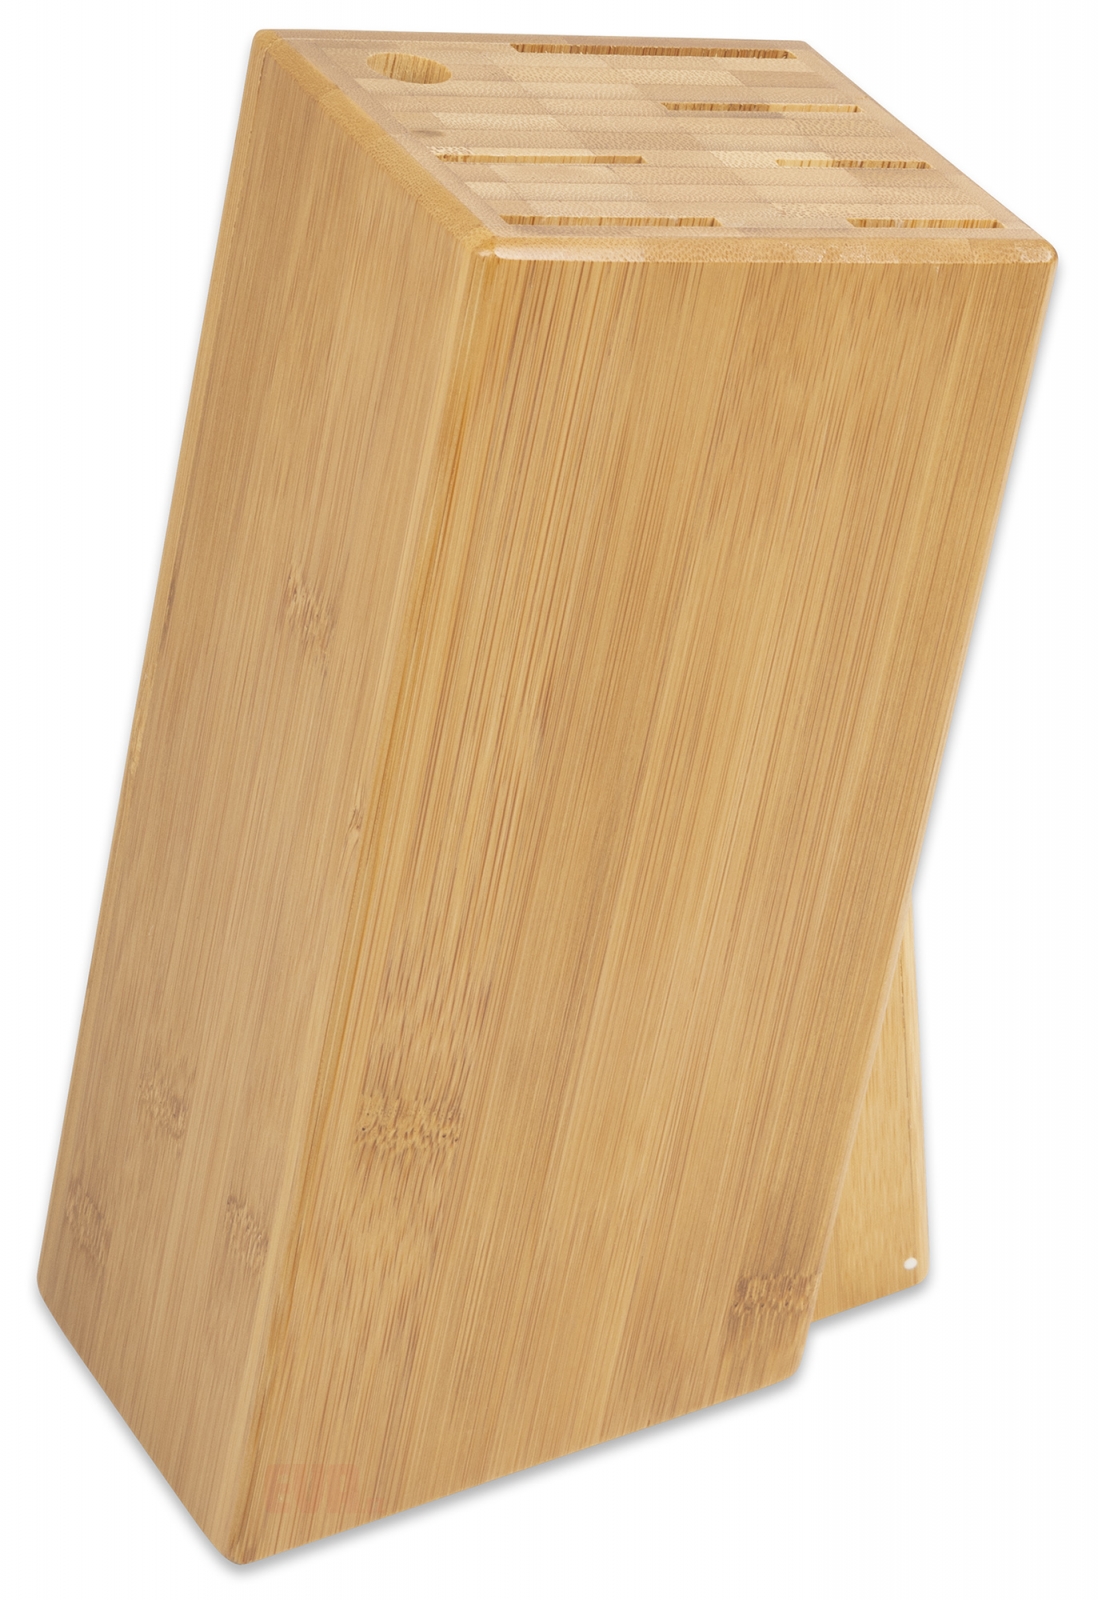 Blok na nože Banquet BRILLANTE Bamboo 14x9x22 cm 229 Kč